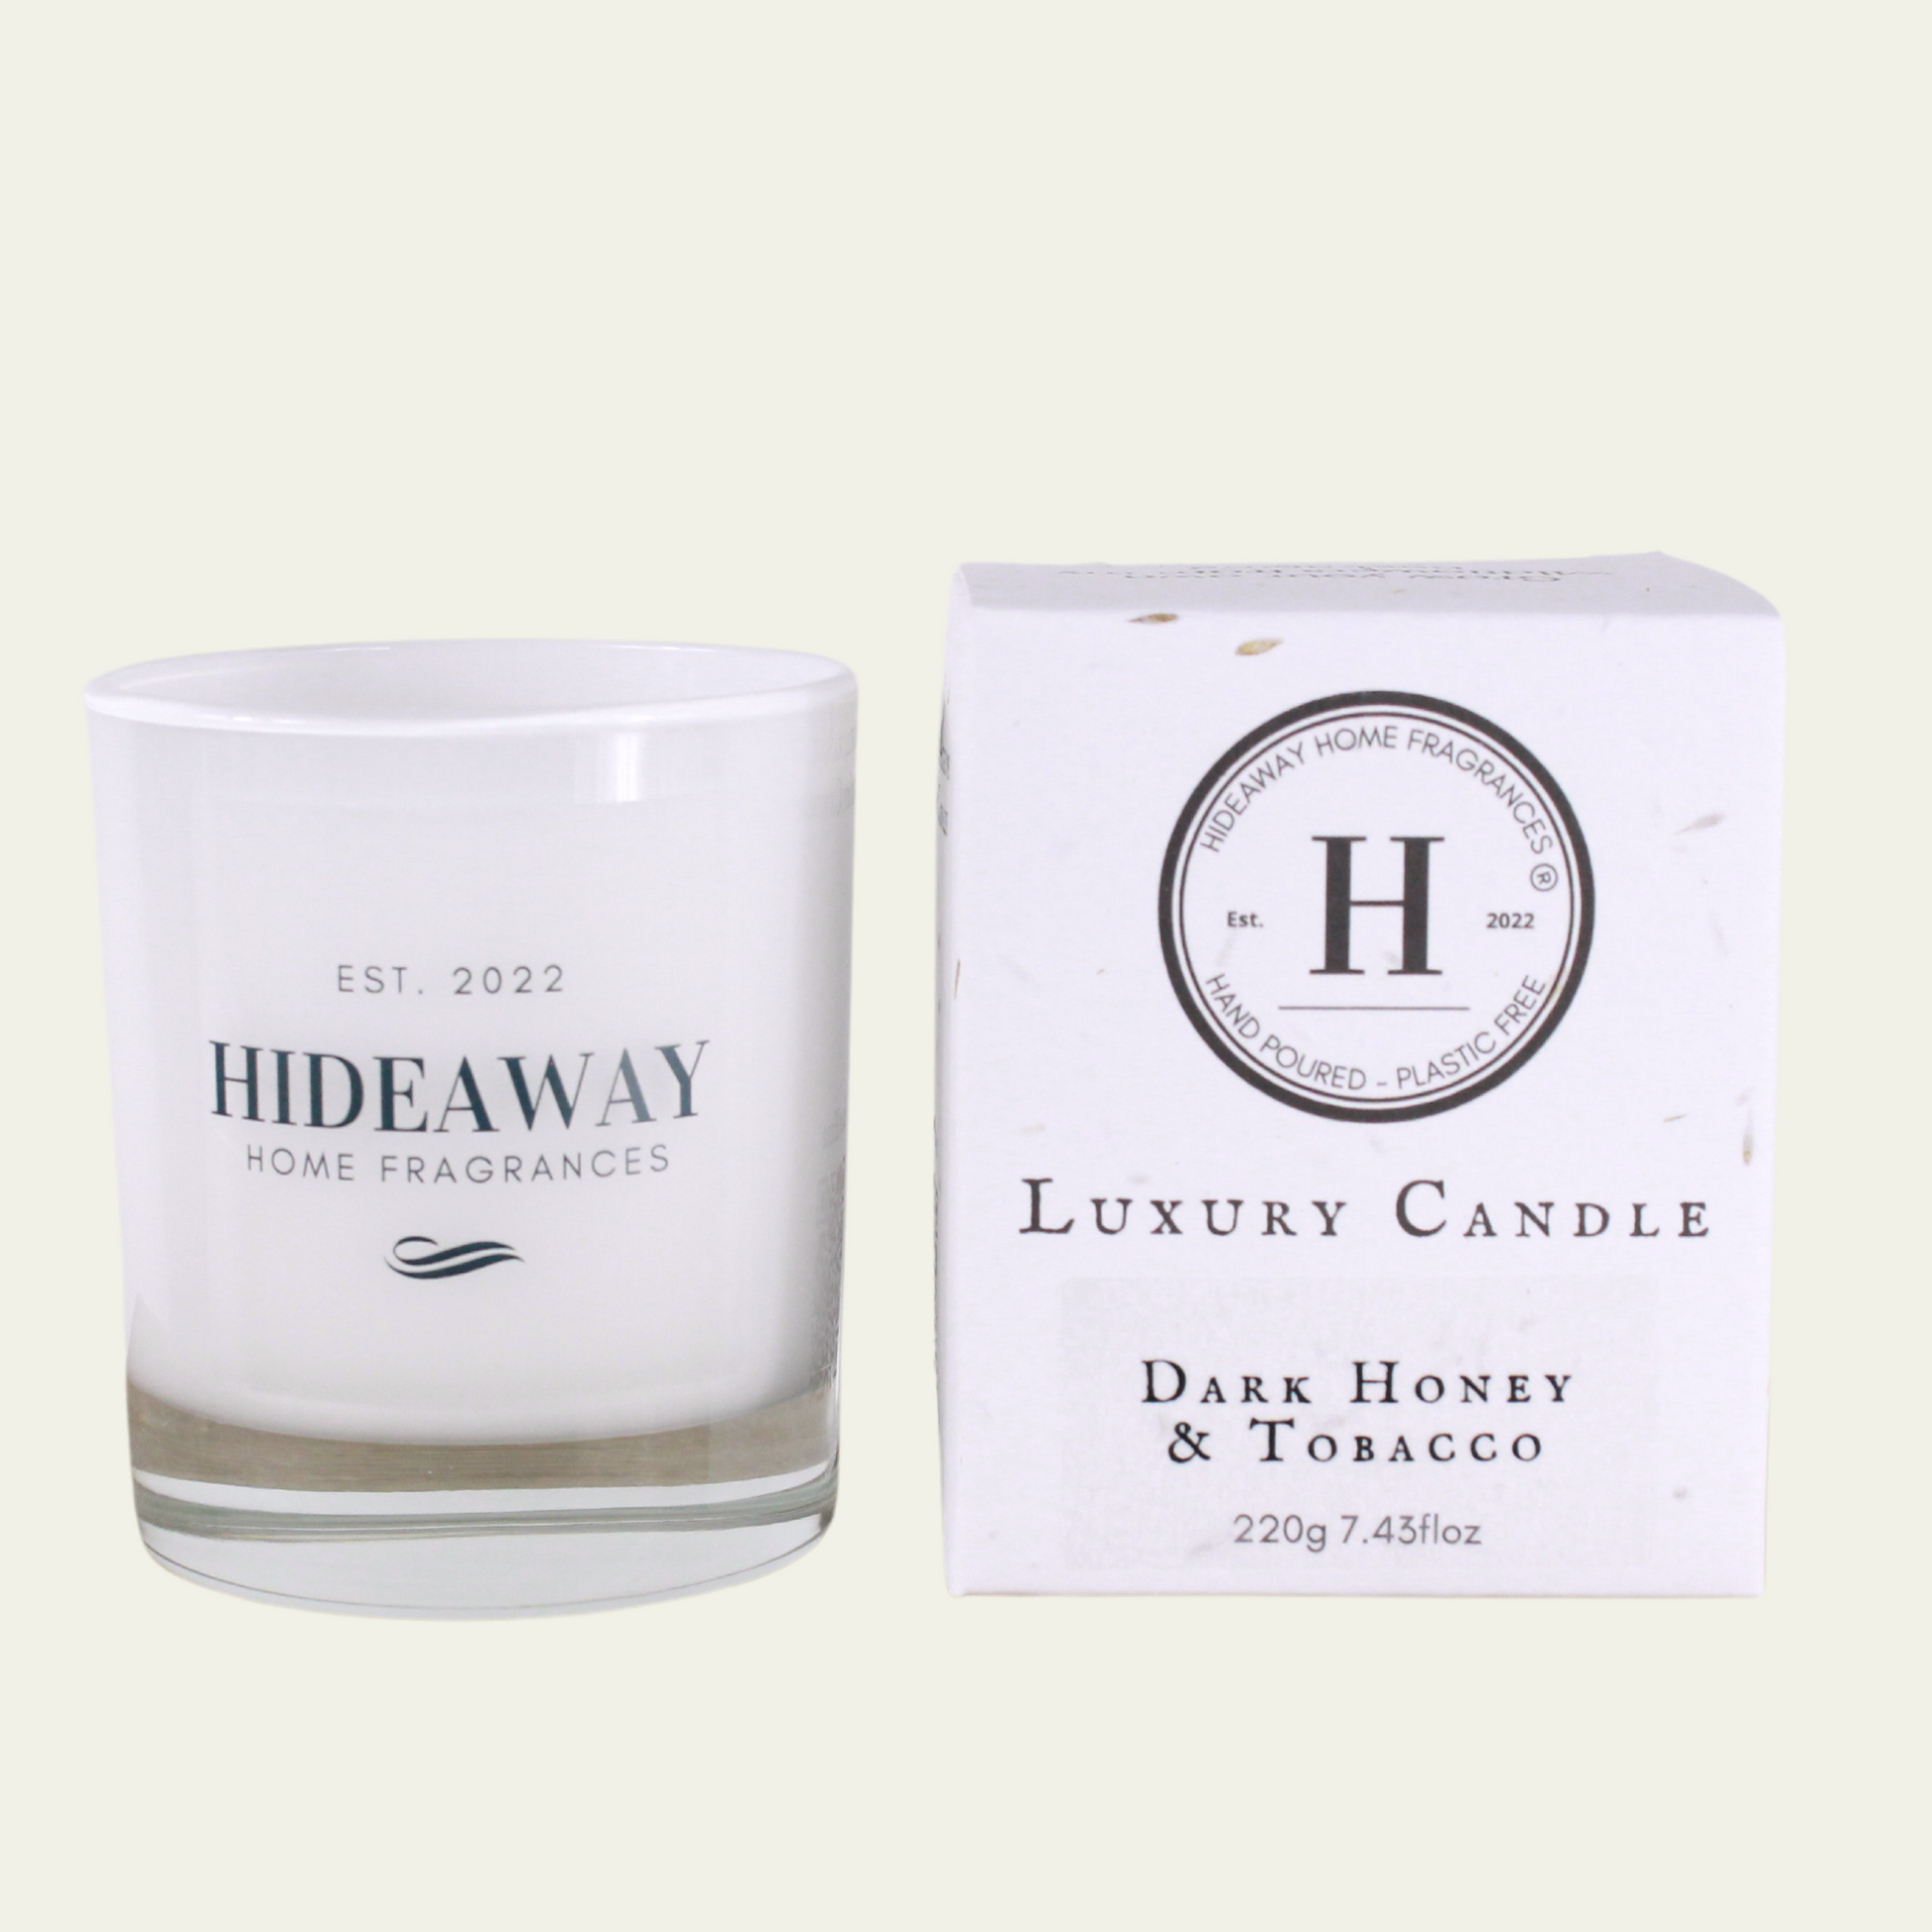 Dark Honey & Tobacco Luxury Candle - Hideaway Home Fragrances